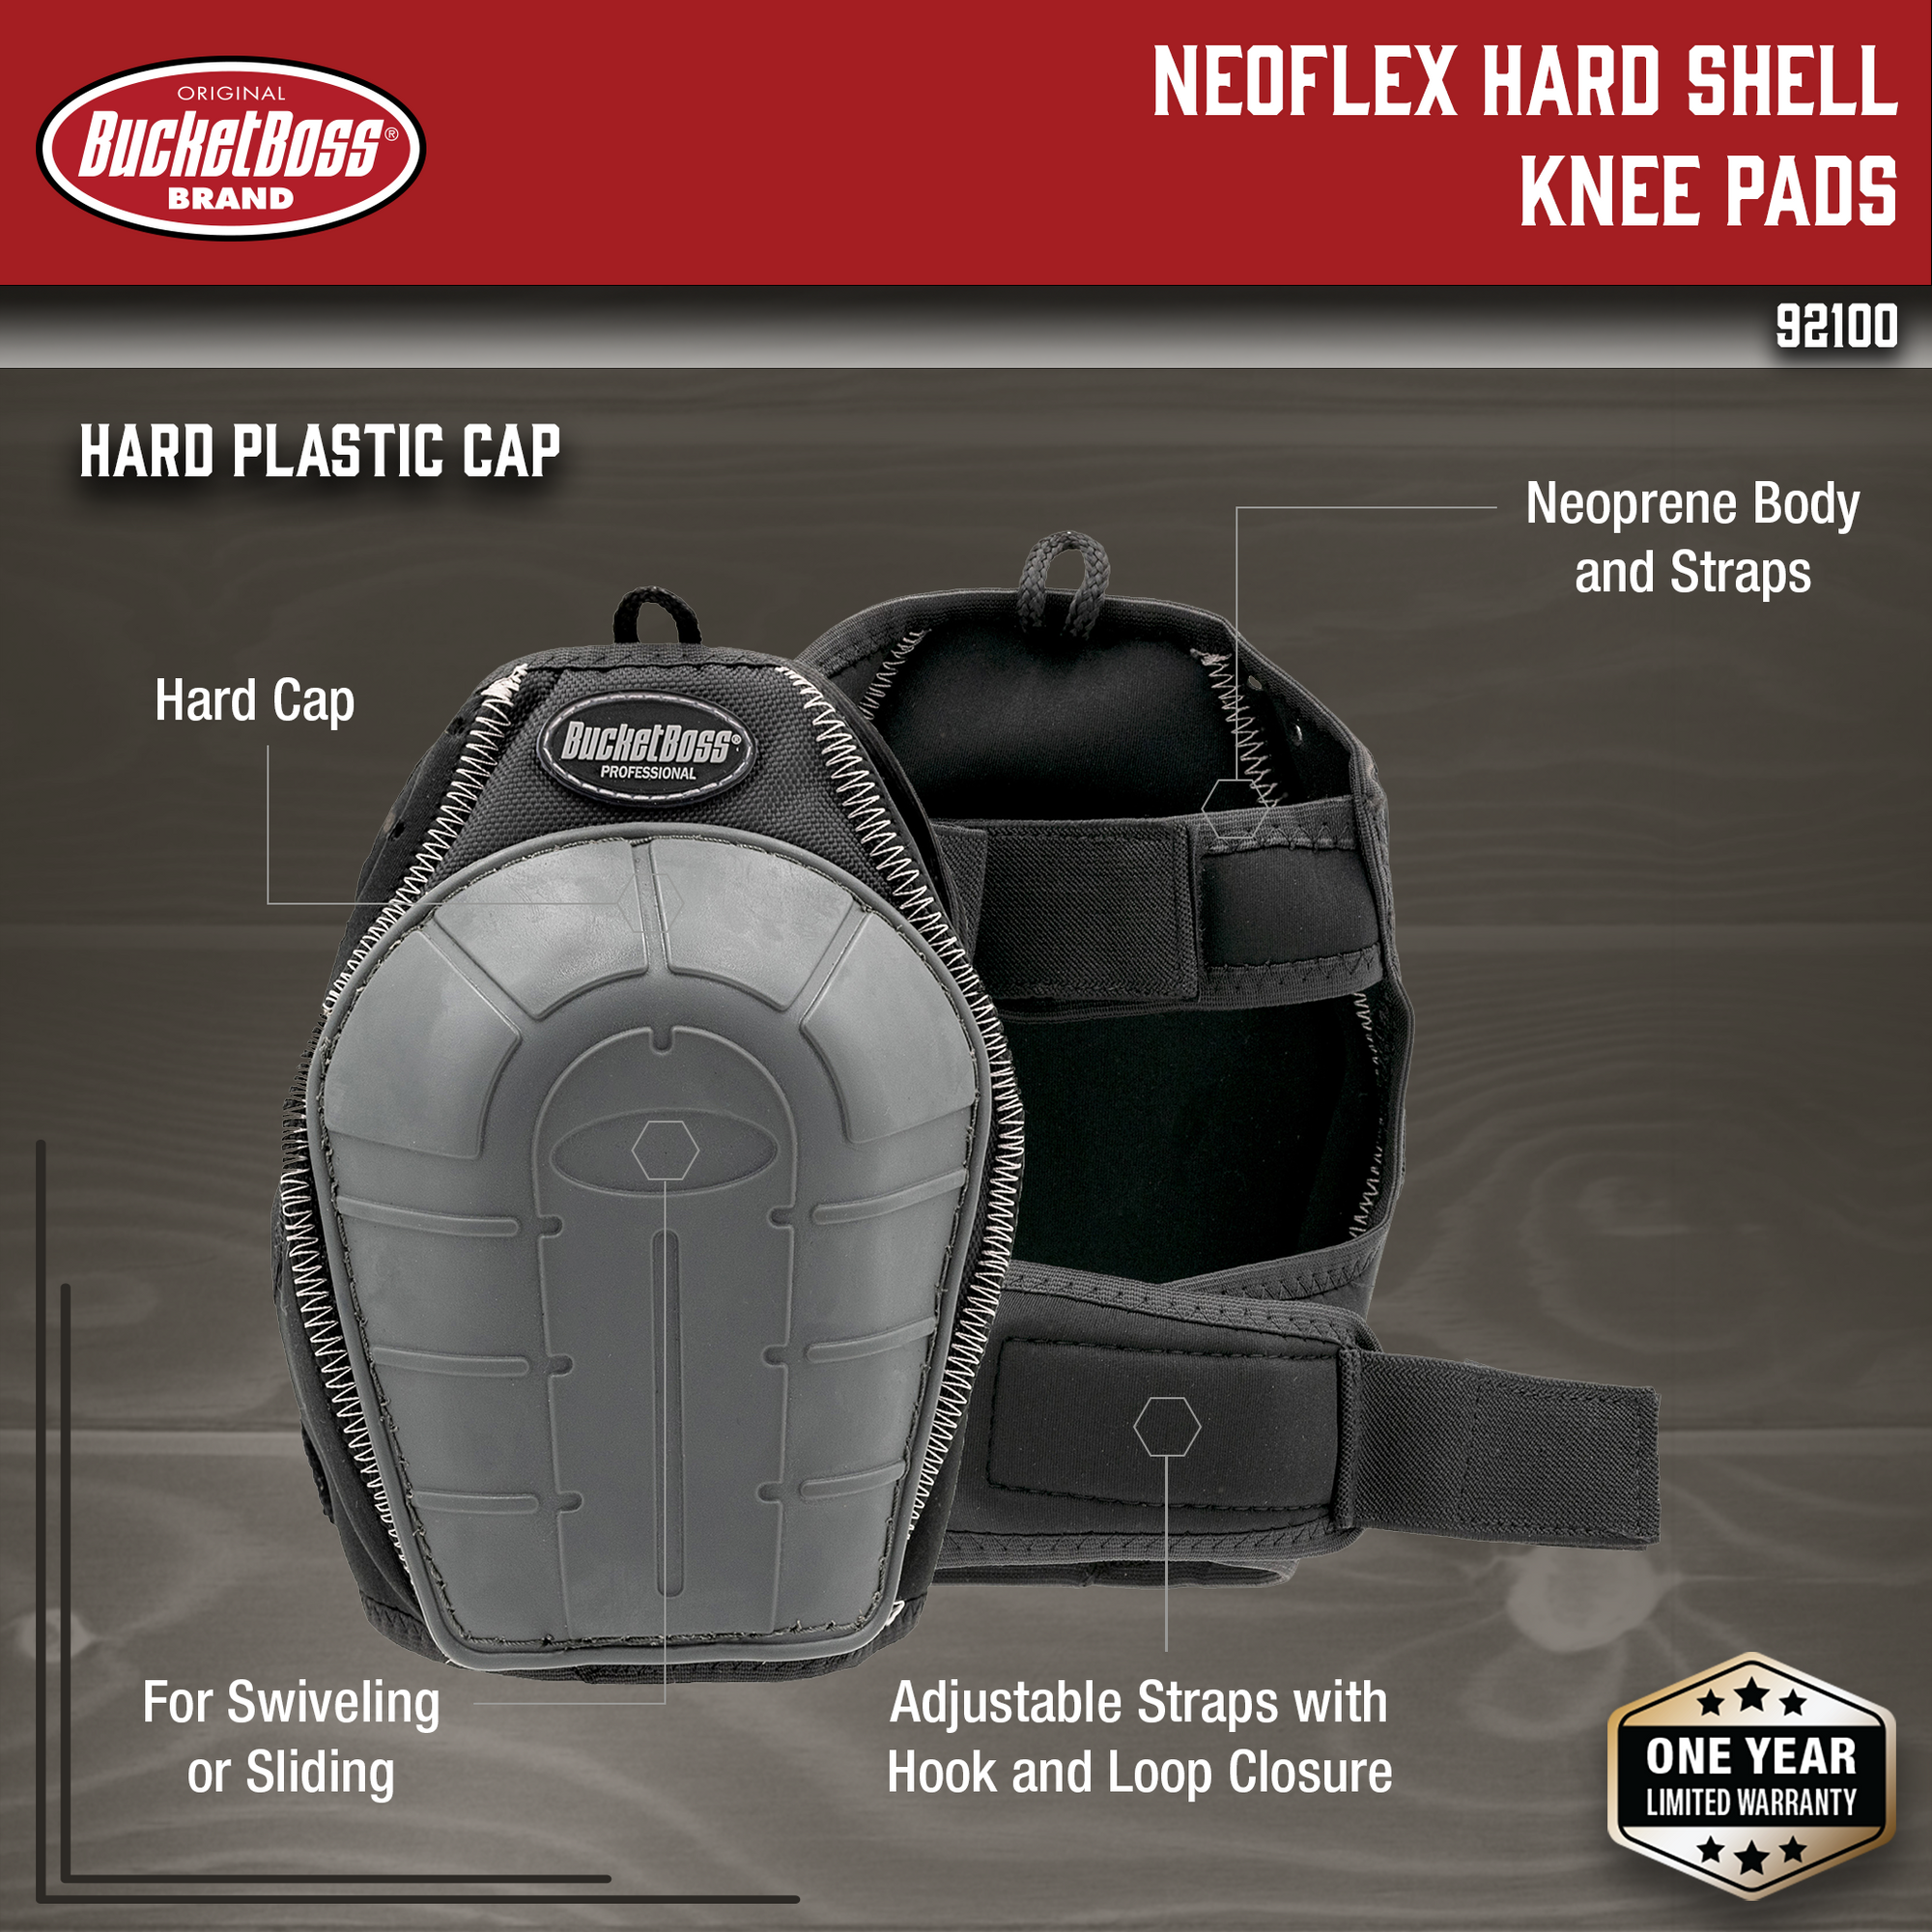 NeoFlex Hard Shell Knee Pads